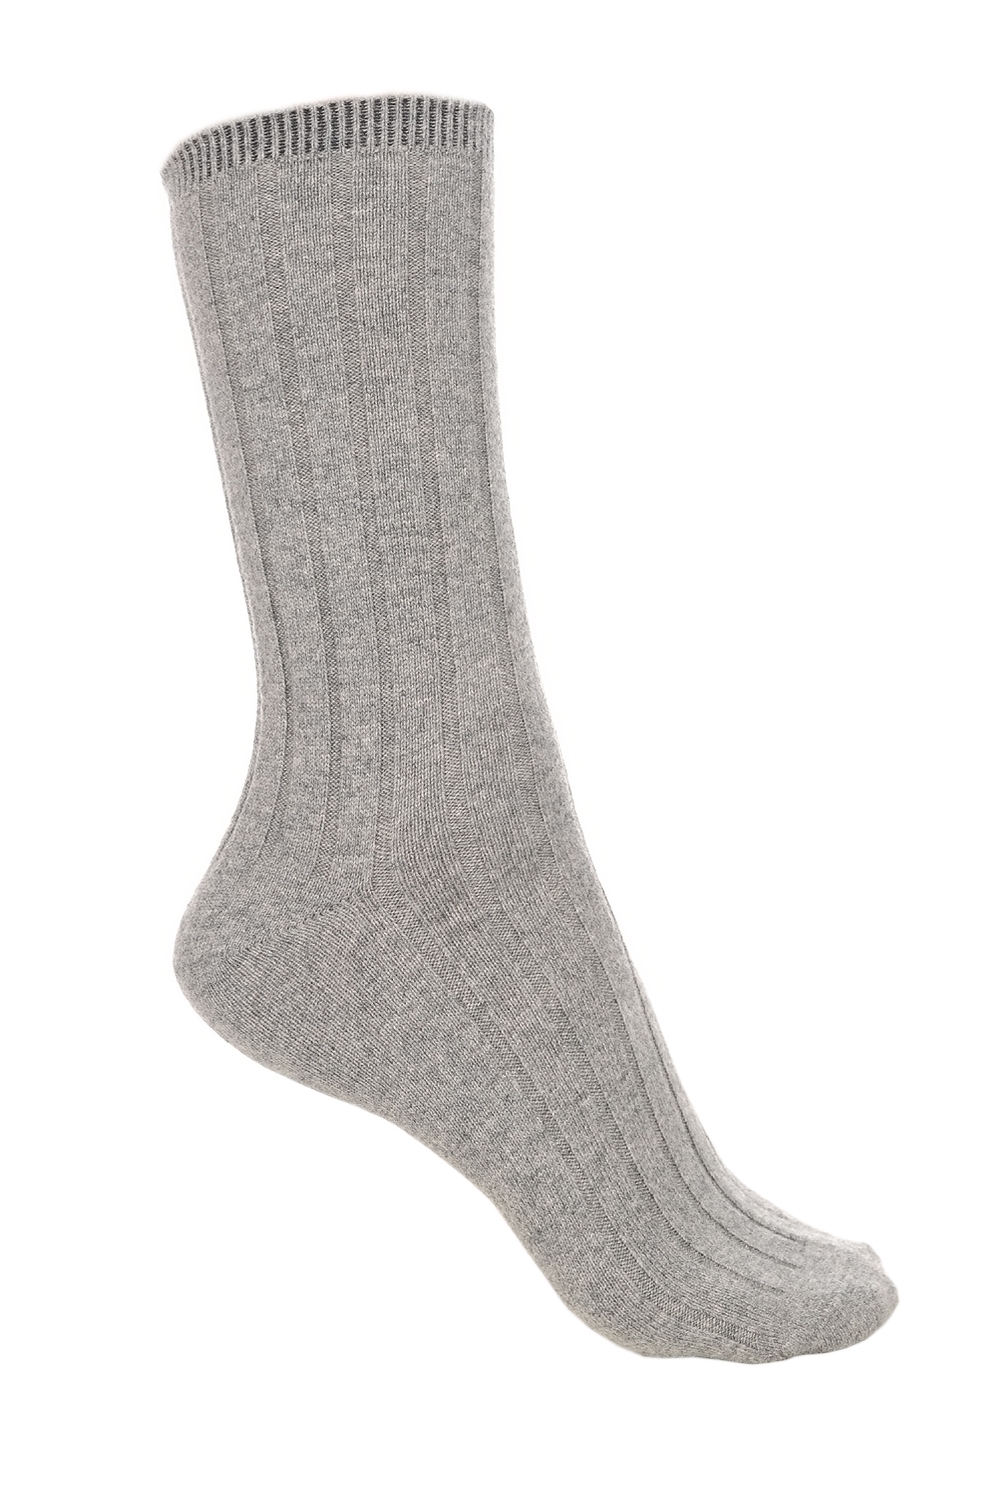 Cashmere & Elastane accessories socks dragibus m grey marl 9 11